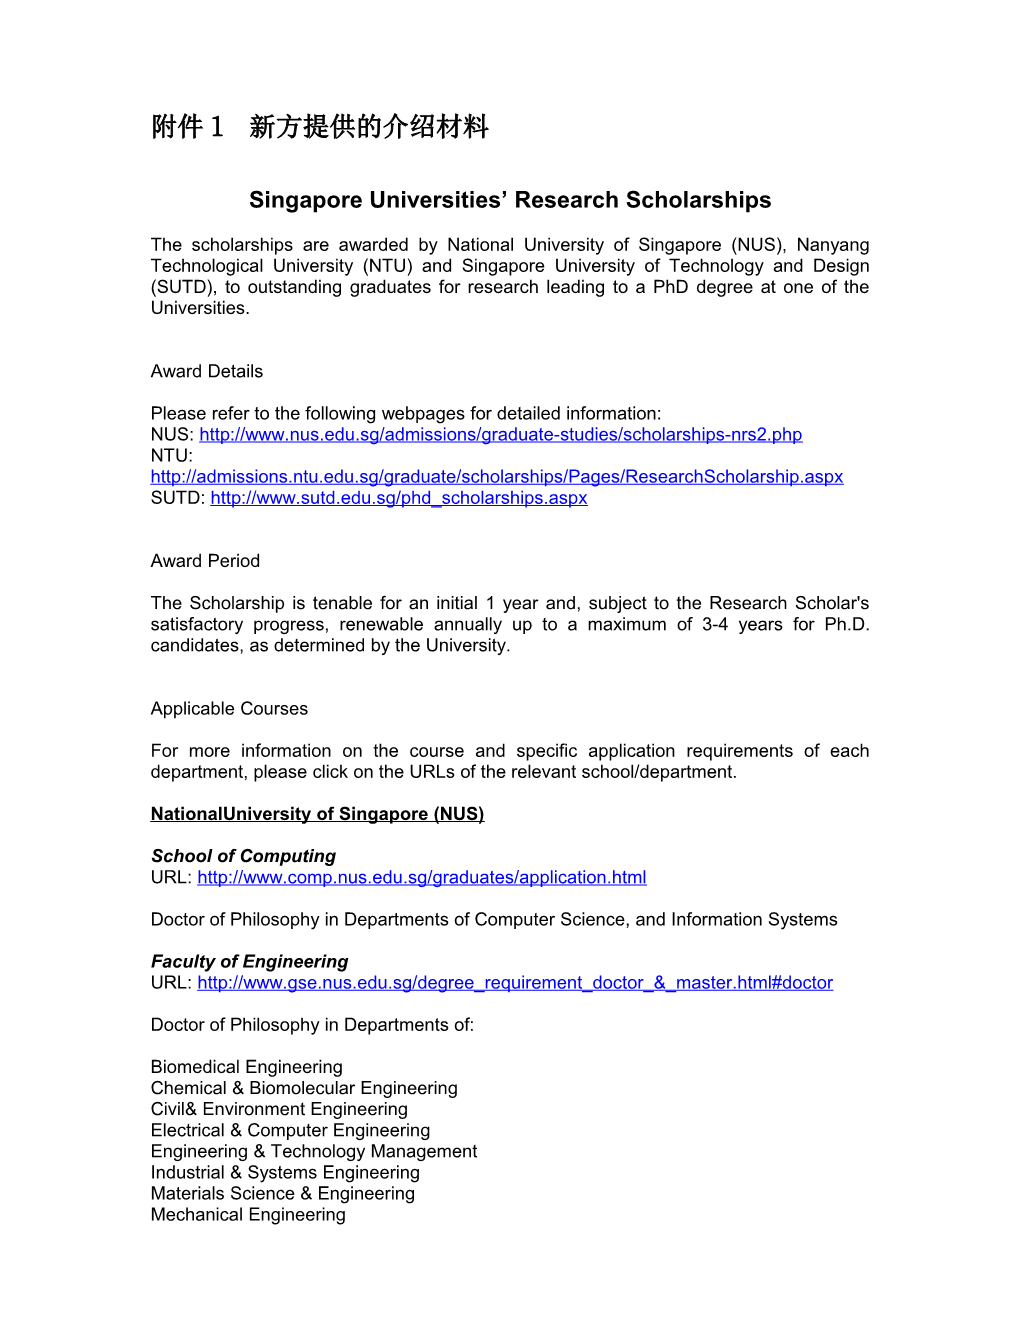 Singapore Universities Research Scholarships